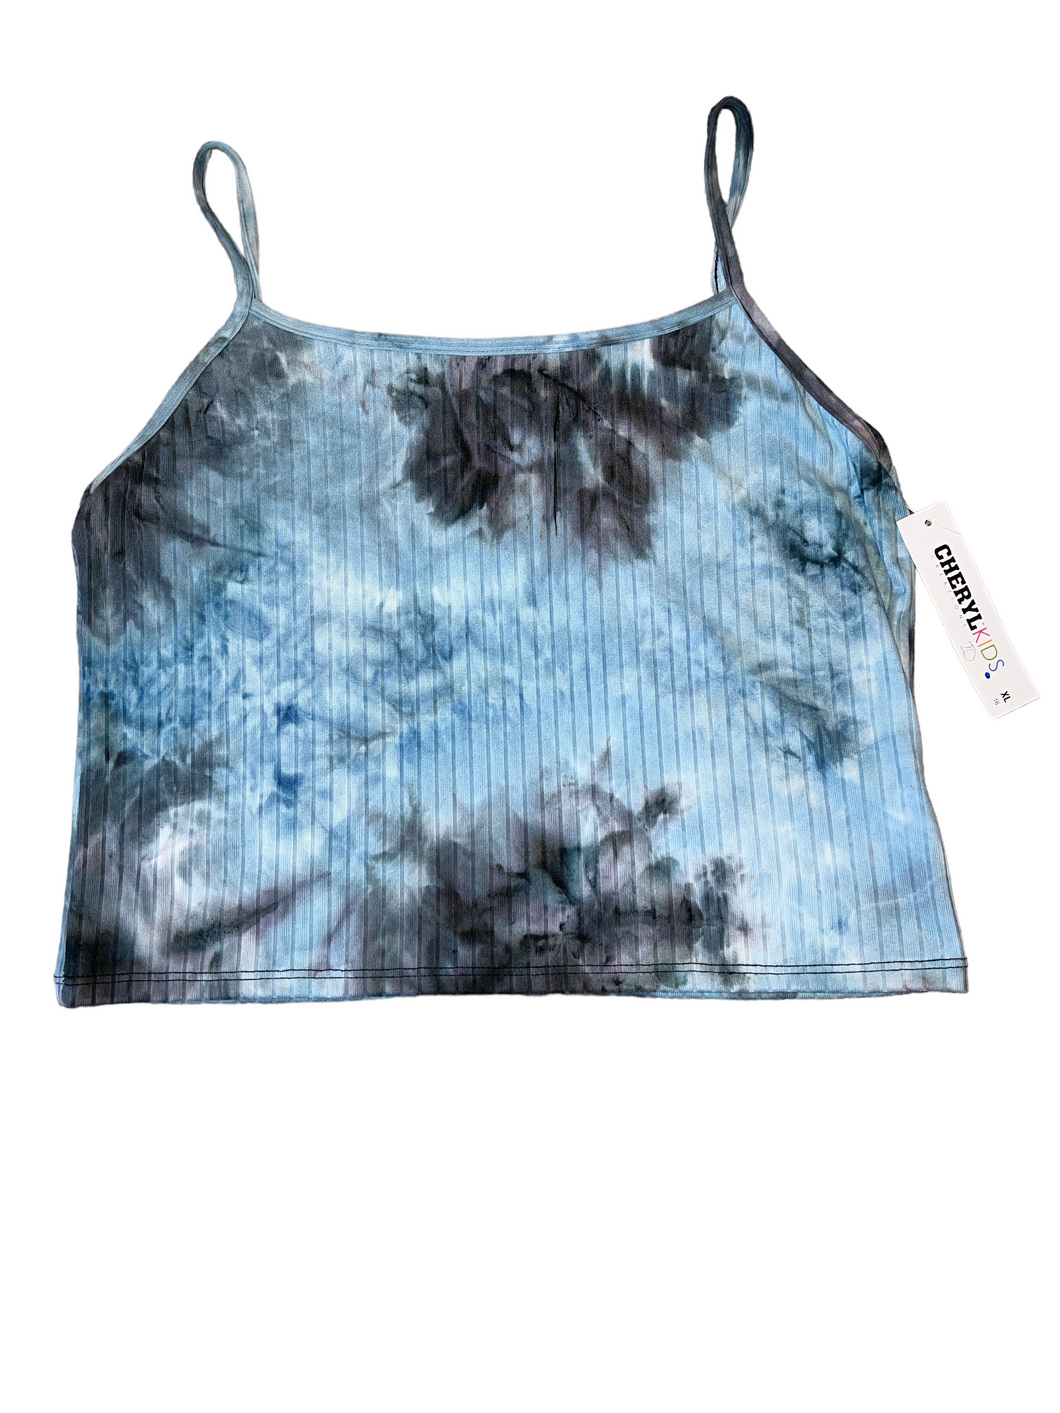 Cheryl Creations Kids tie dye cropped cami tank top XL(16) NEW